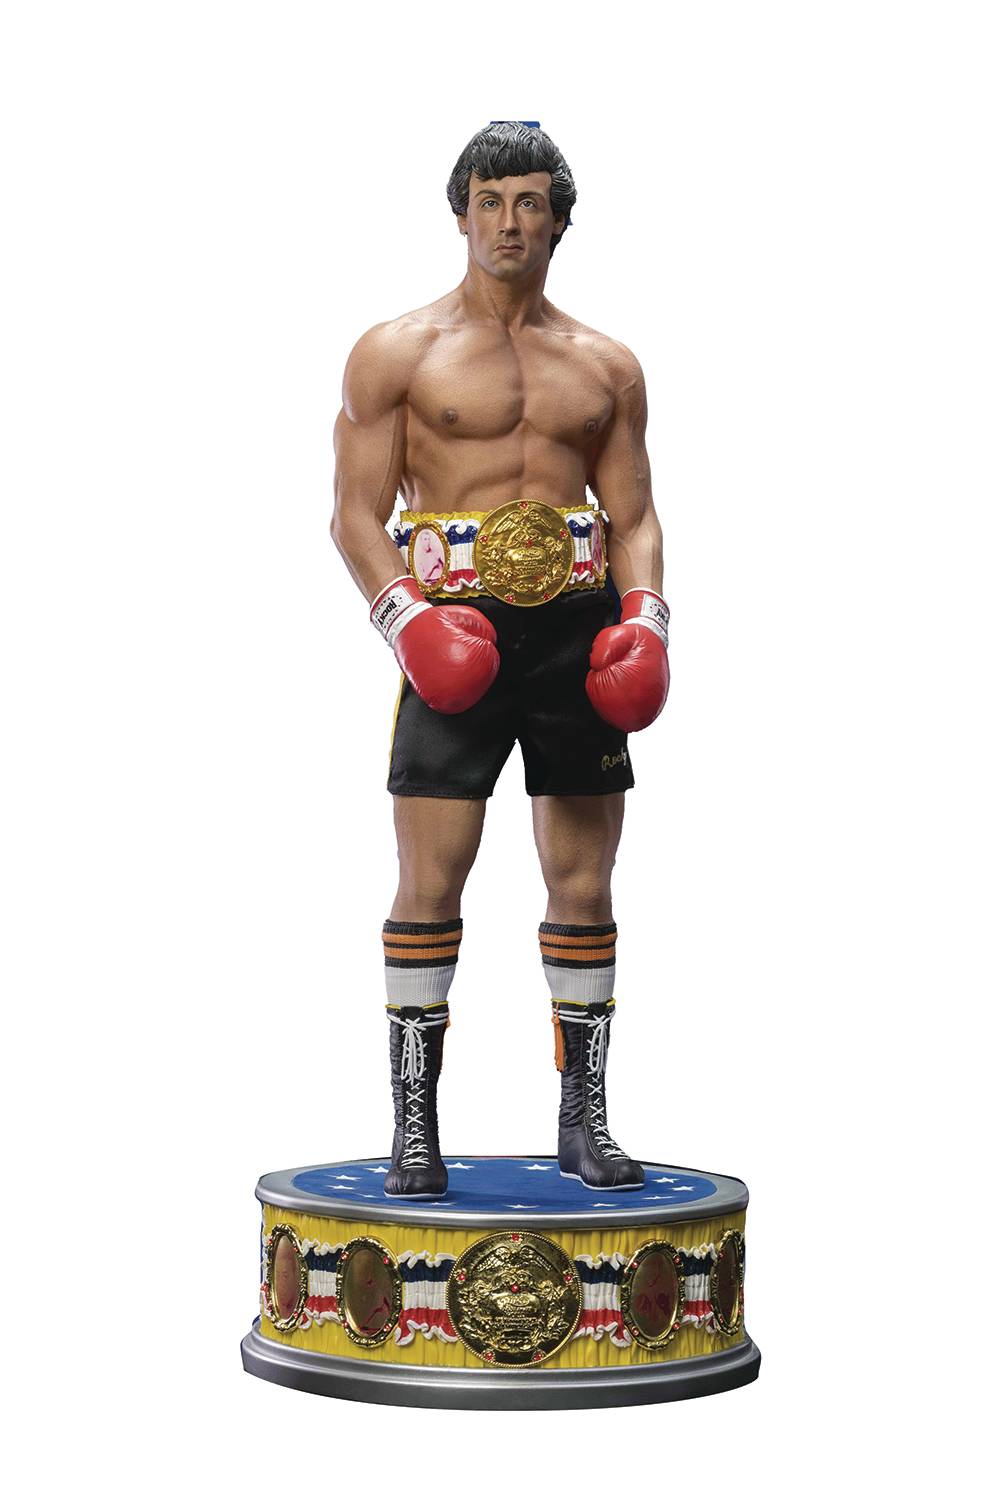 Star Ace Toys Rocky III Statuette 1/4 Rocky Balboa 46 cm